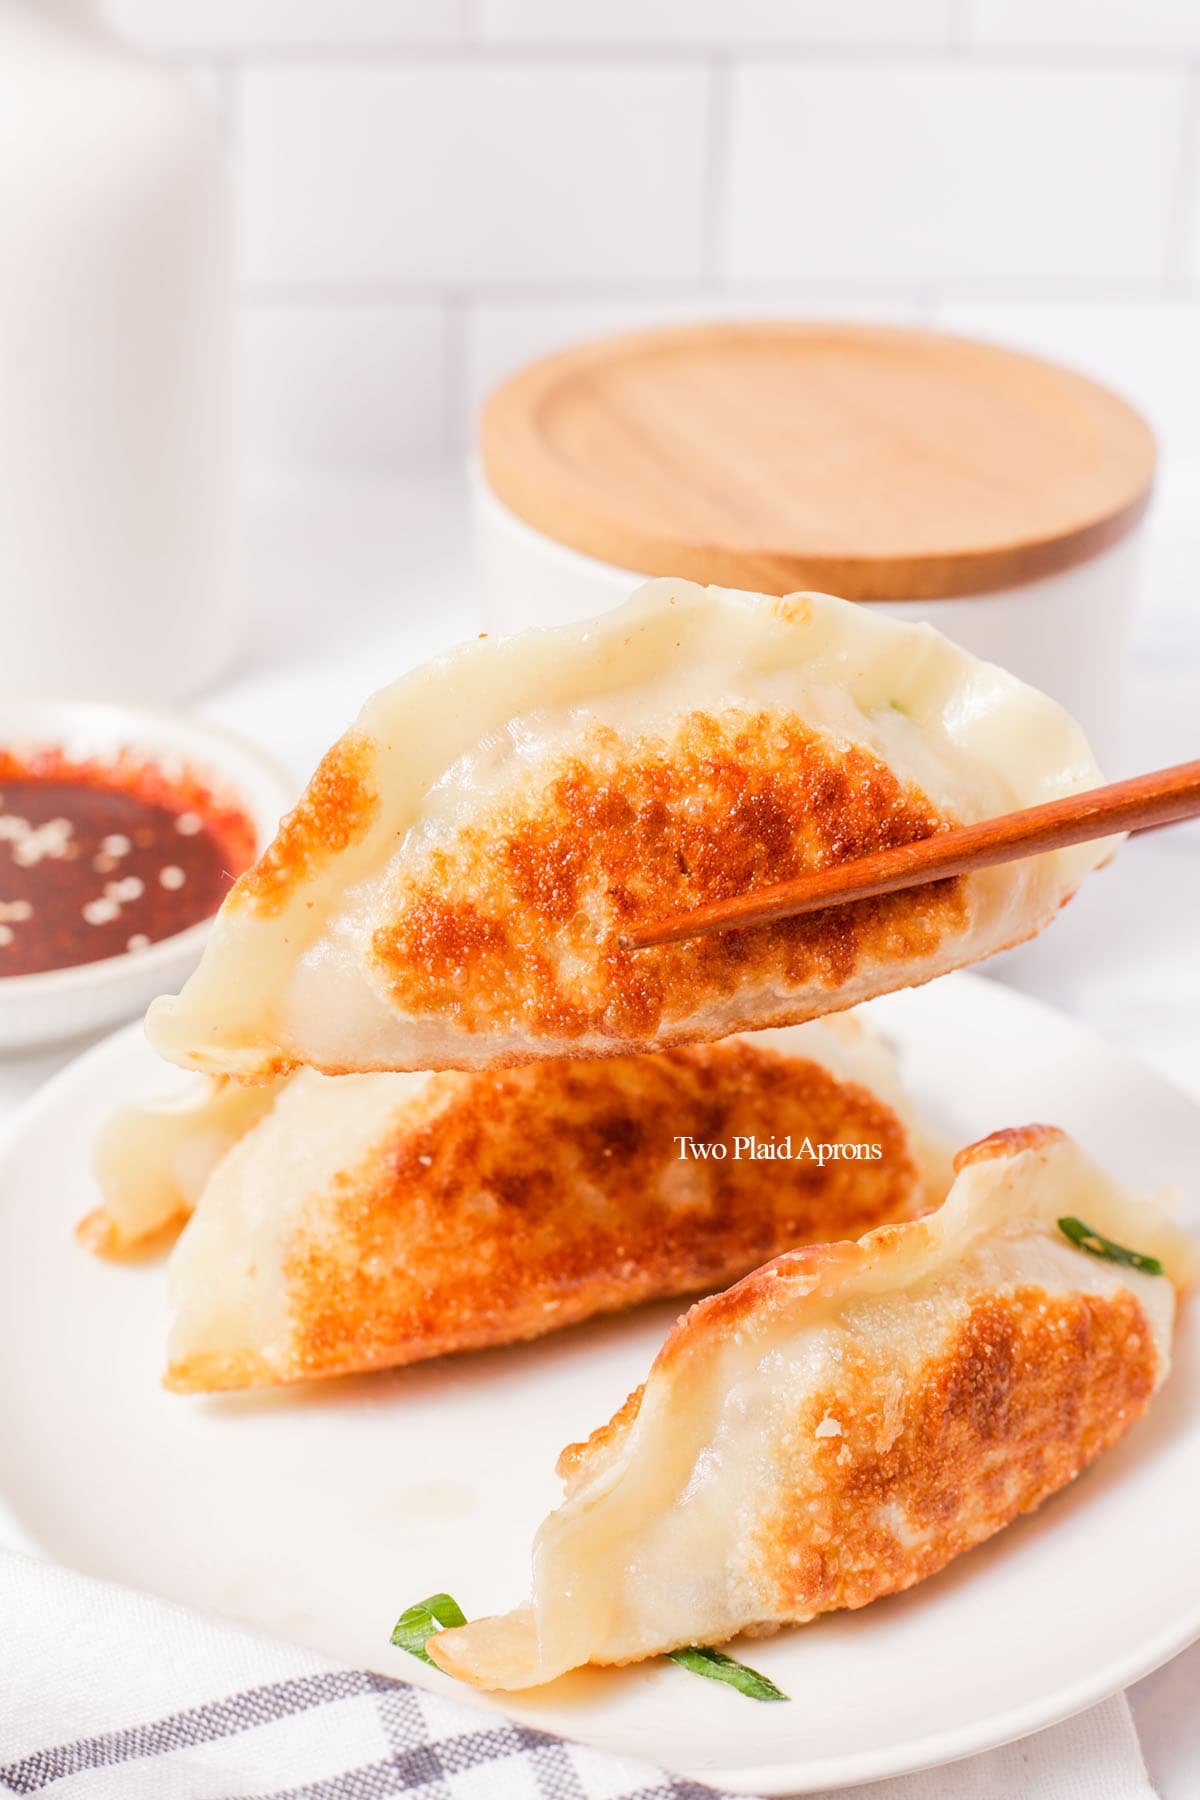 Holding pan fried mandu with chopsticks.